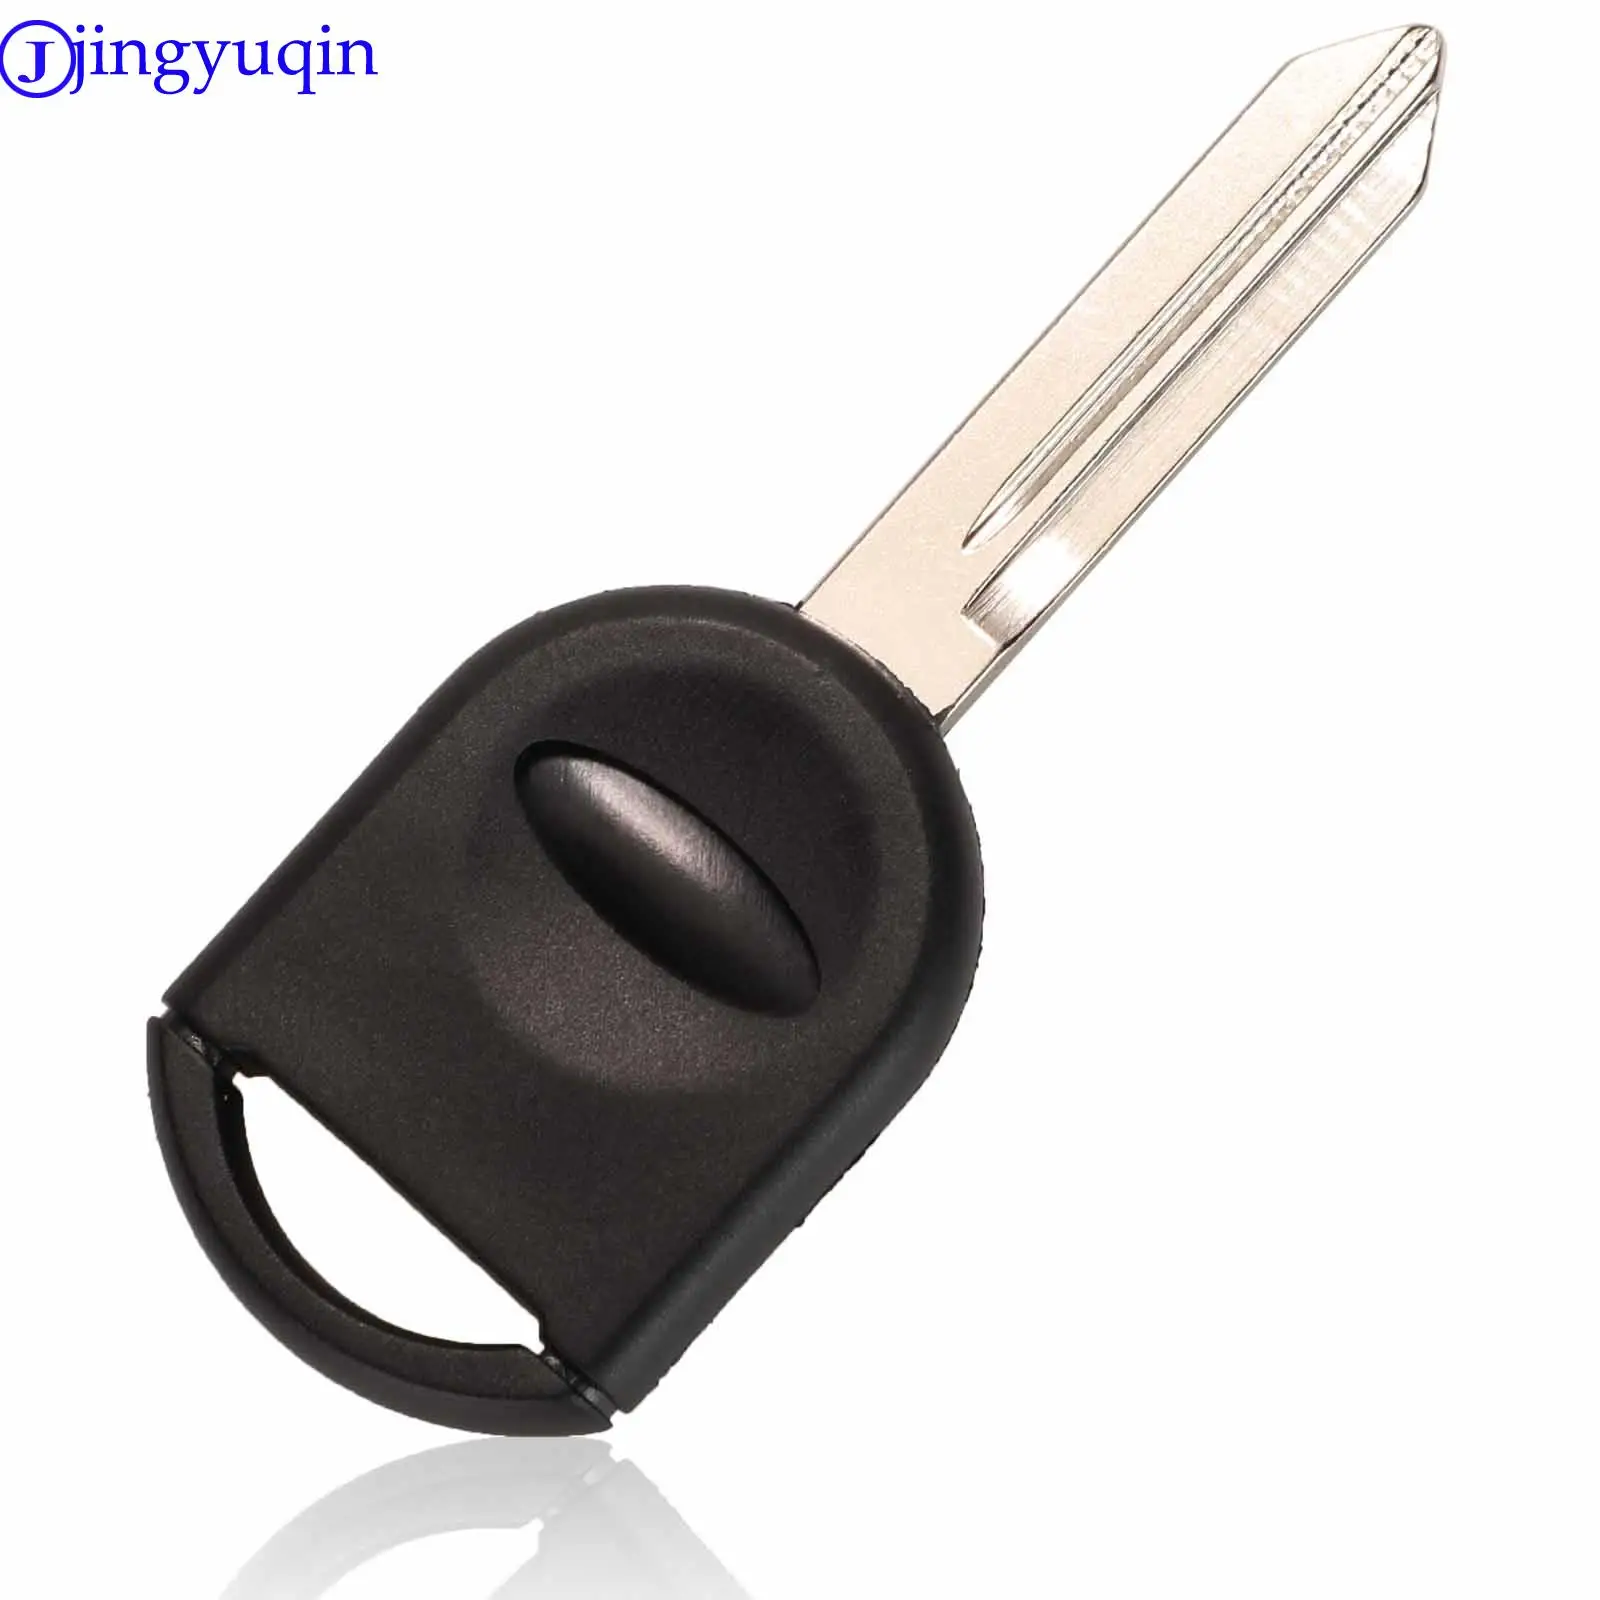 

jingyuqin 10pcs Transponder Key Shell Car Key Blank Case For FORD Lincoln Mercury Remote Key Case Fob New Uncut FO38R Blade